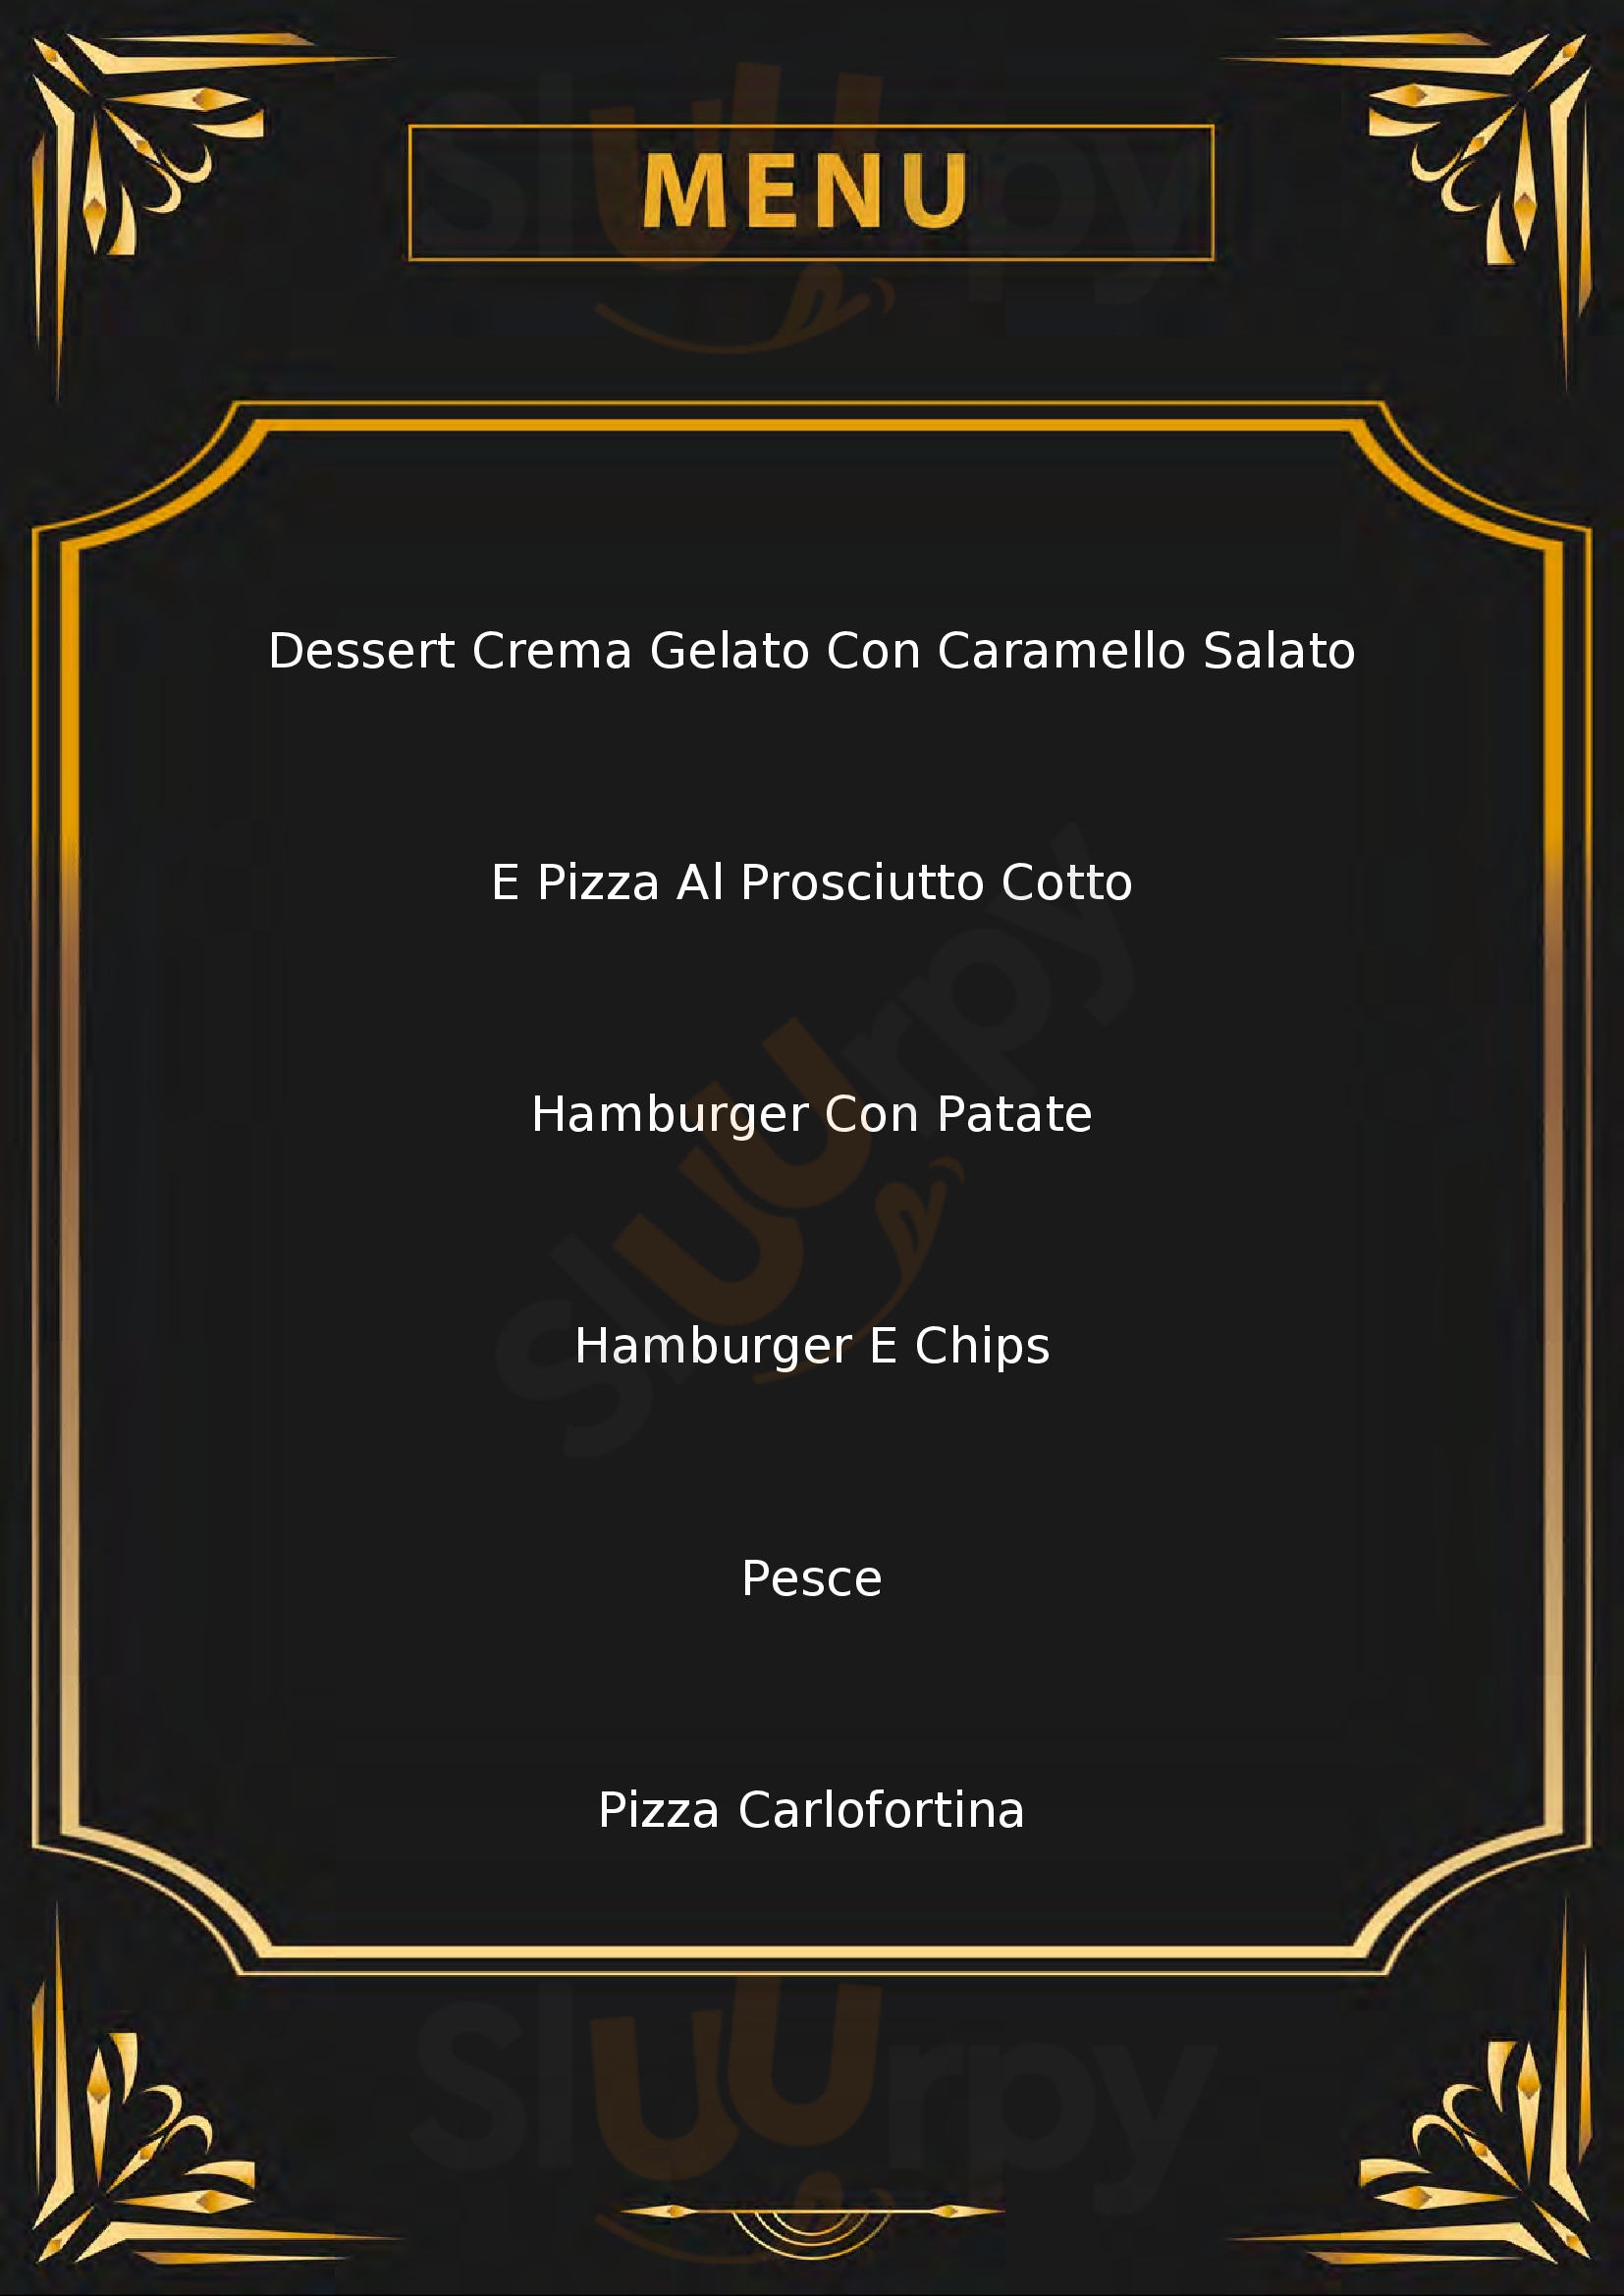 Next Food & Lounge Cagliari menù 1 pagina